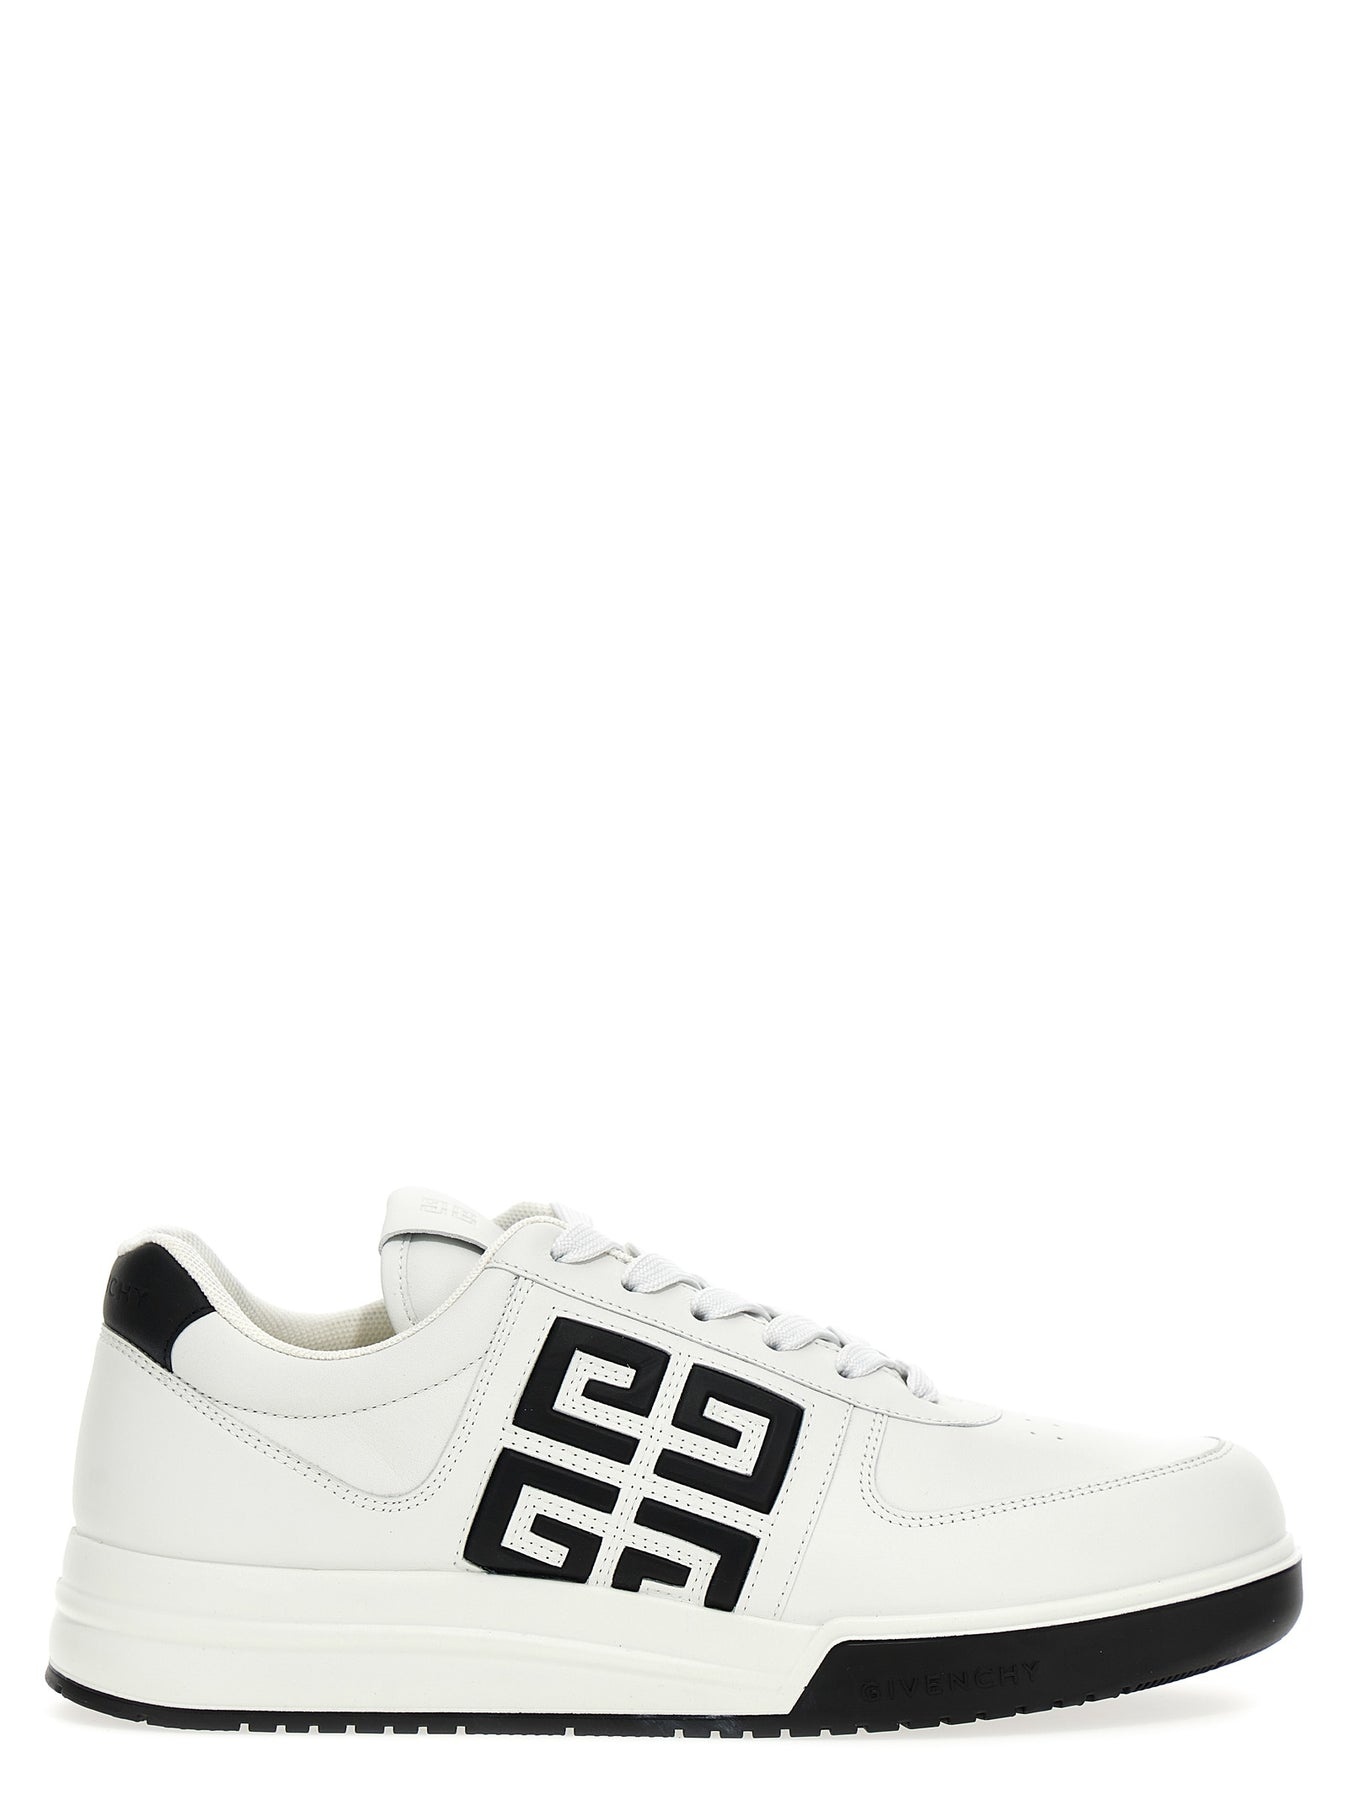 G4 Sneakers White/Black - 1